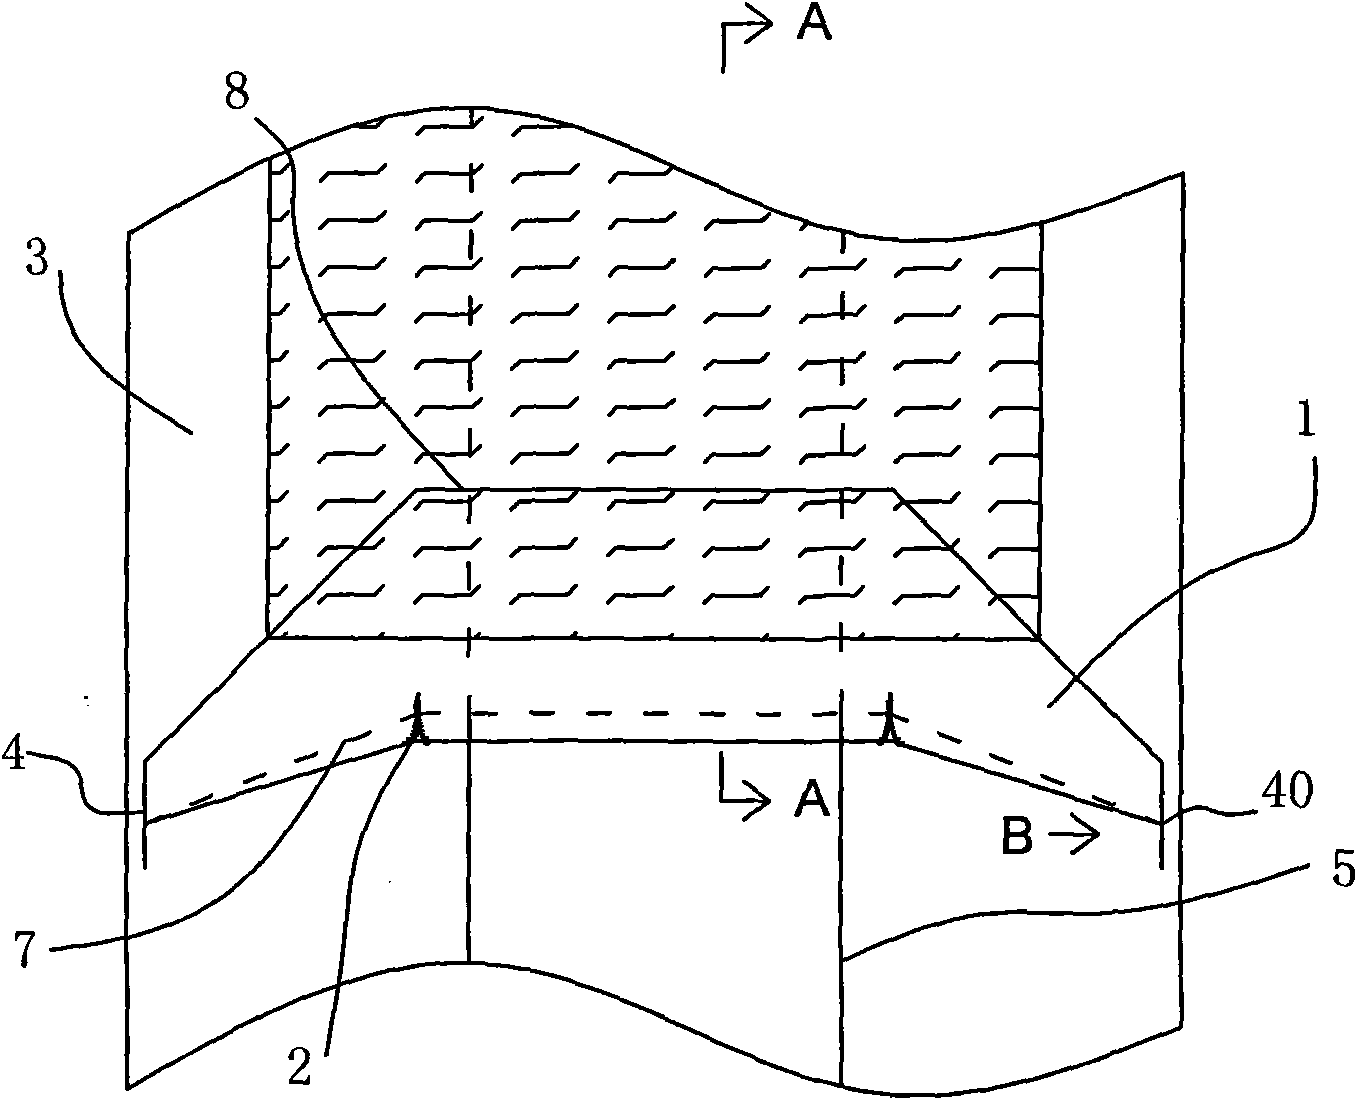 Method for assembling rubber dam in slope-shaped river channel